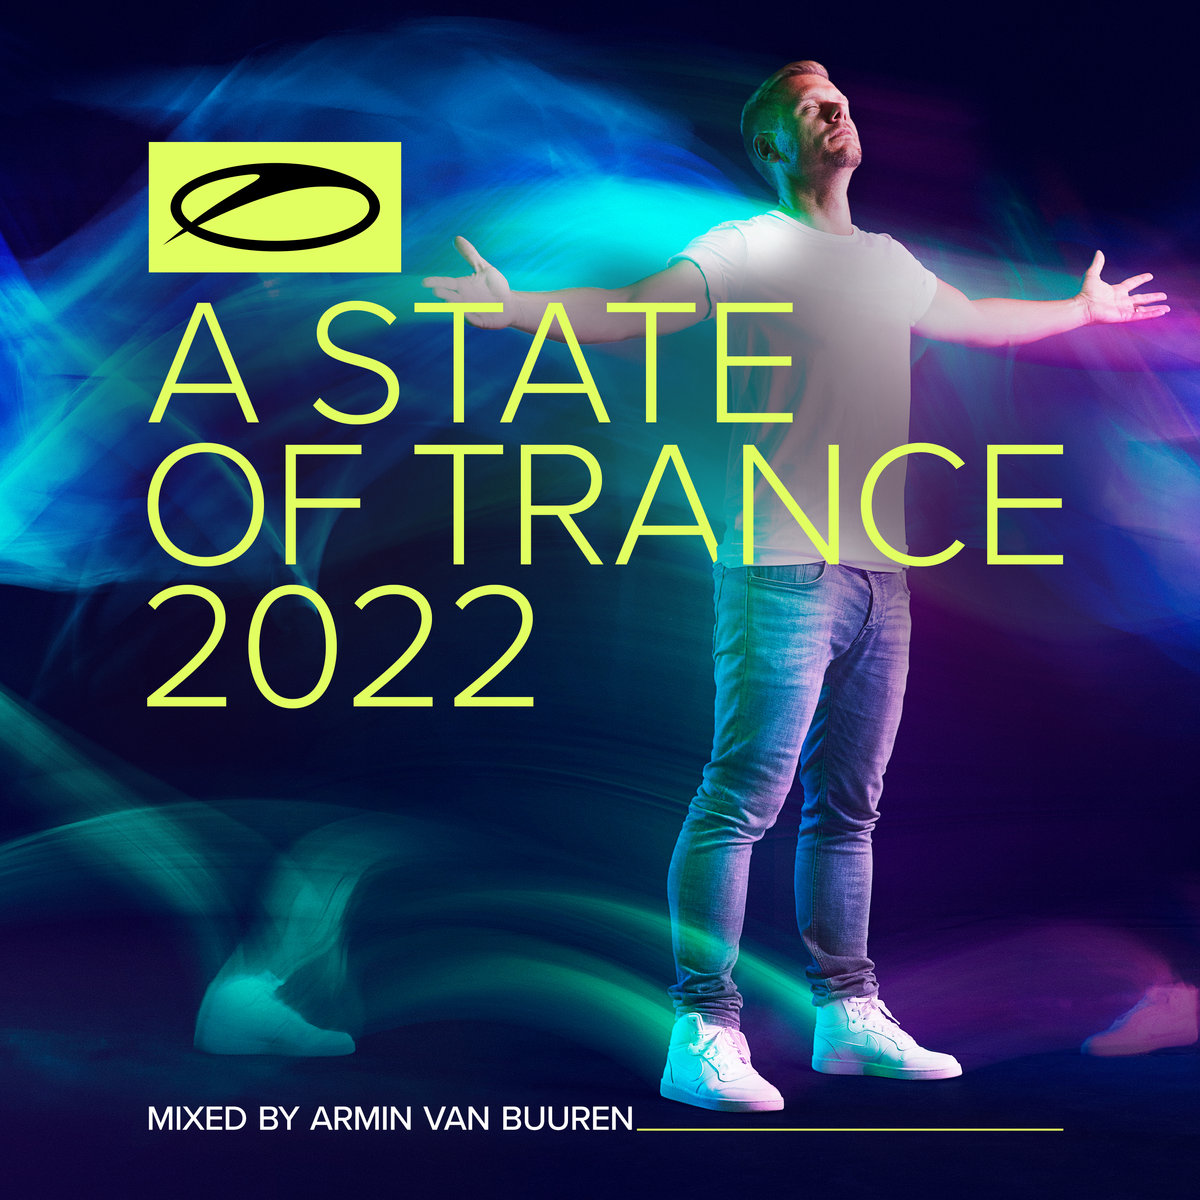 Armin van Buuren – A state of trance 2022